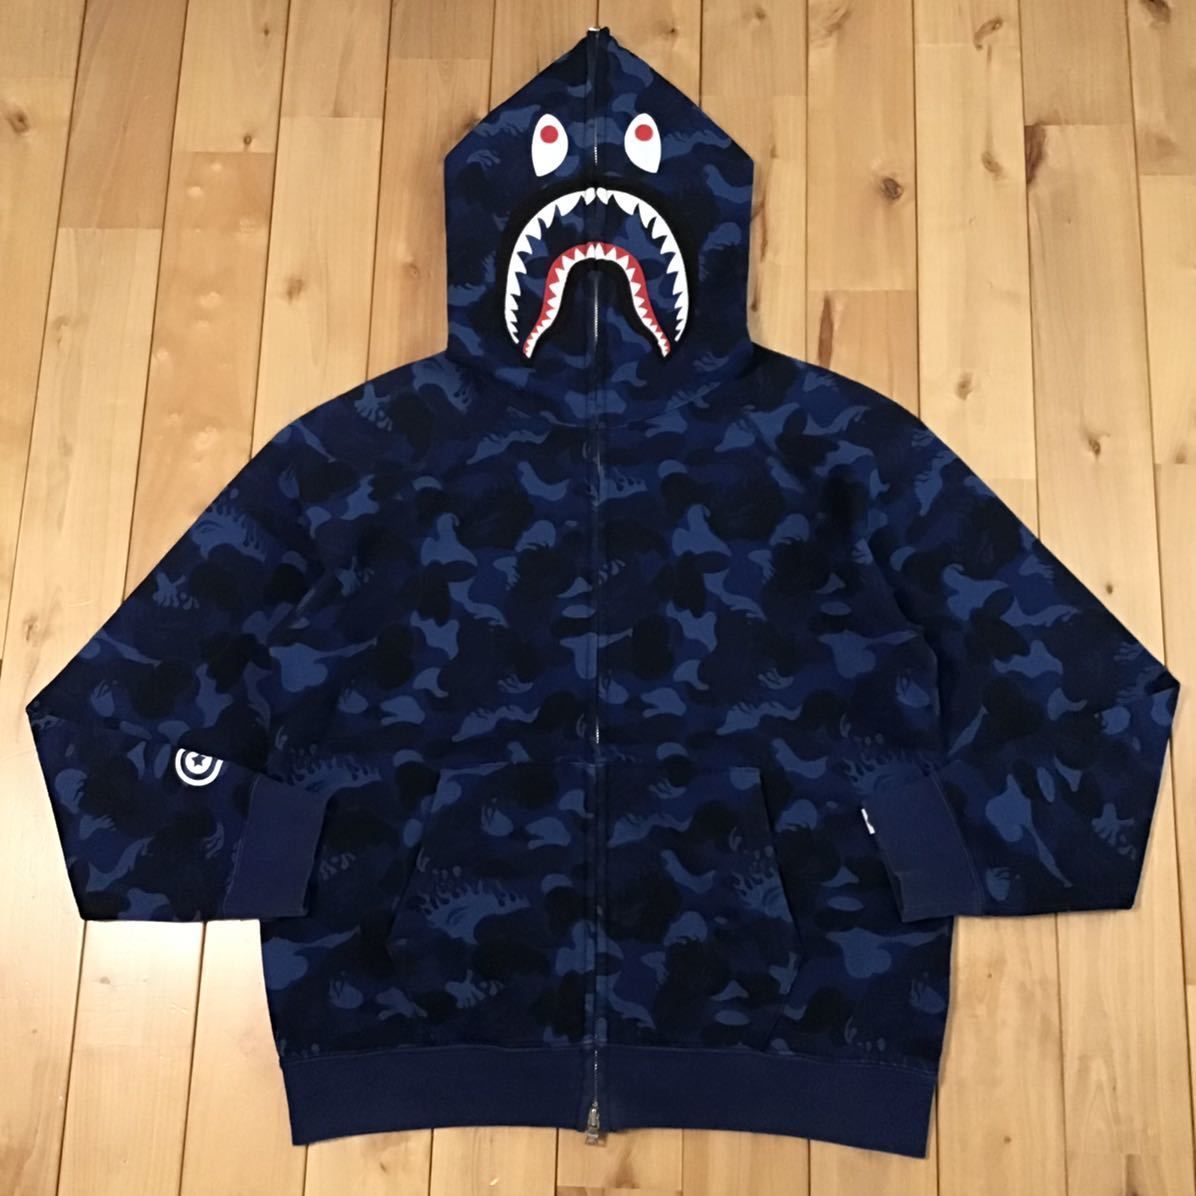 Fire camo シャーク パーカー shark full zip hoodie a bathing ape 